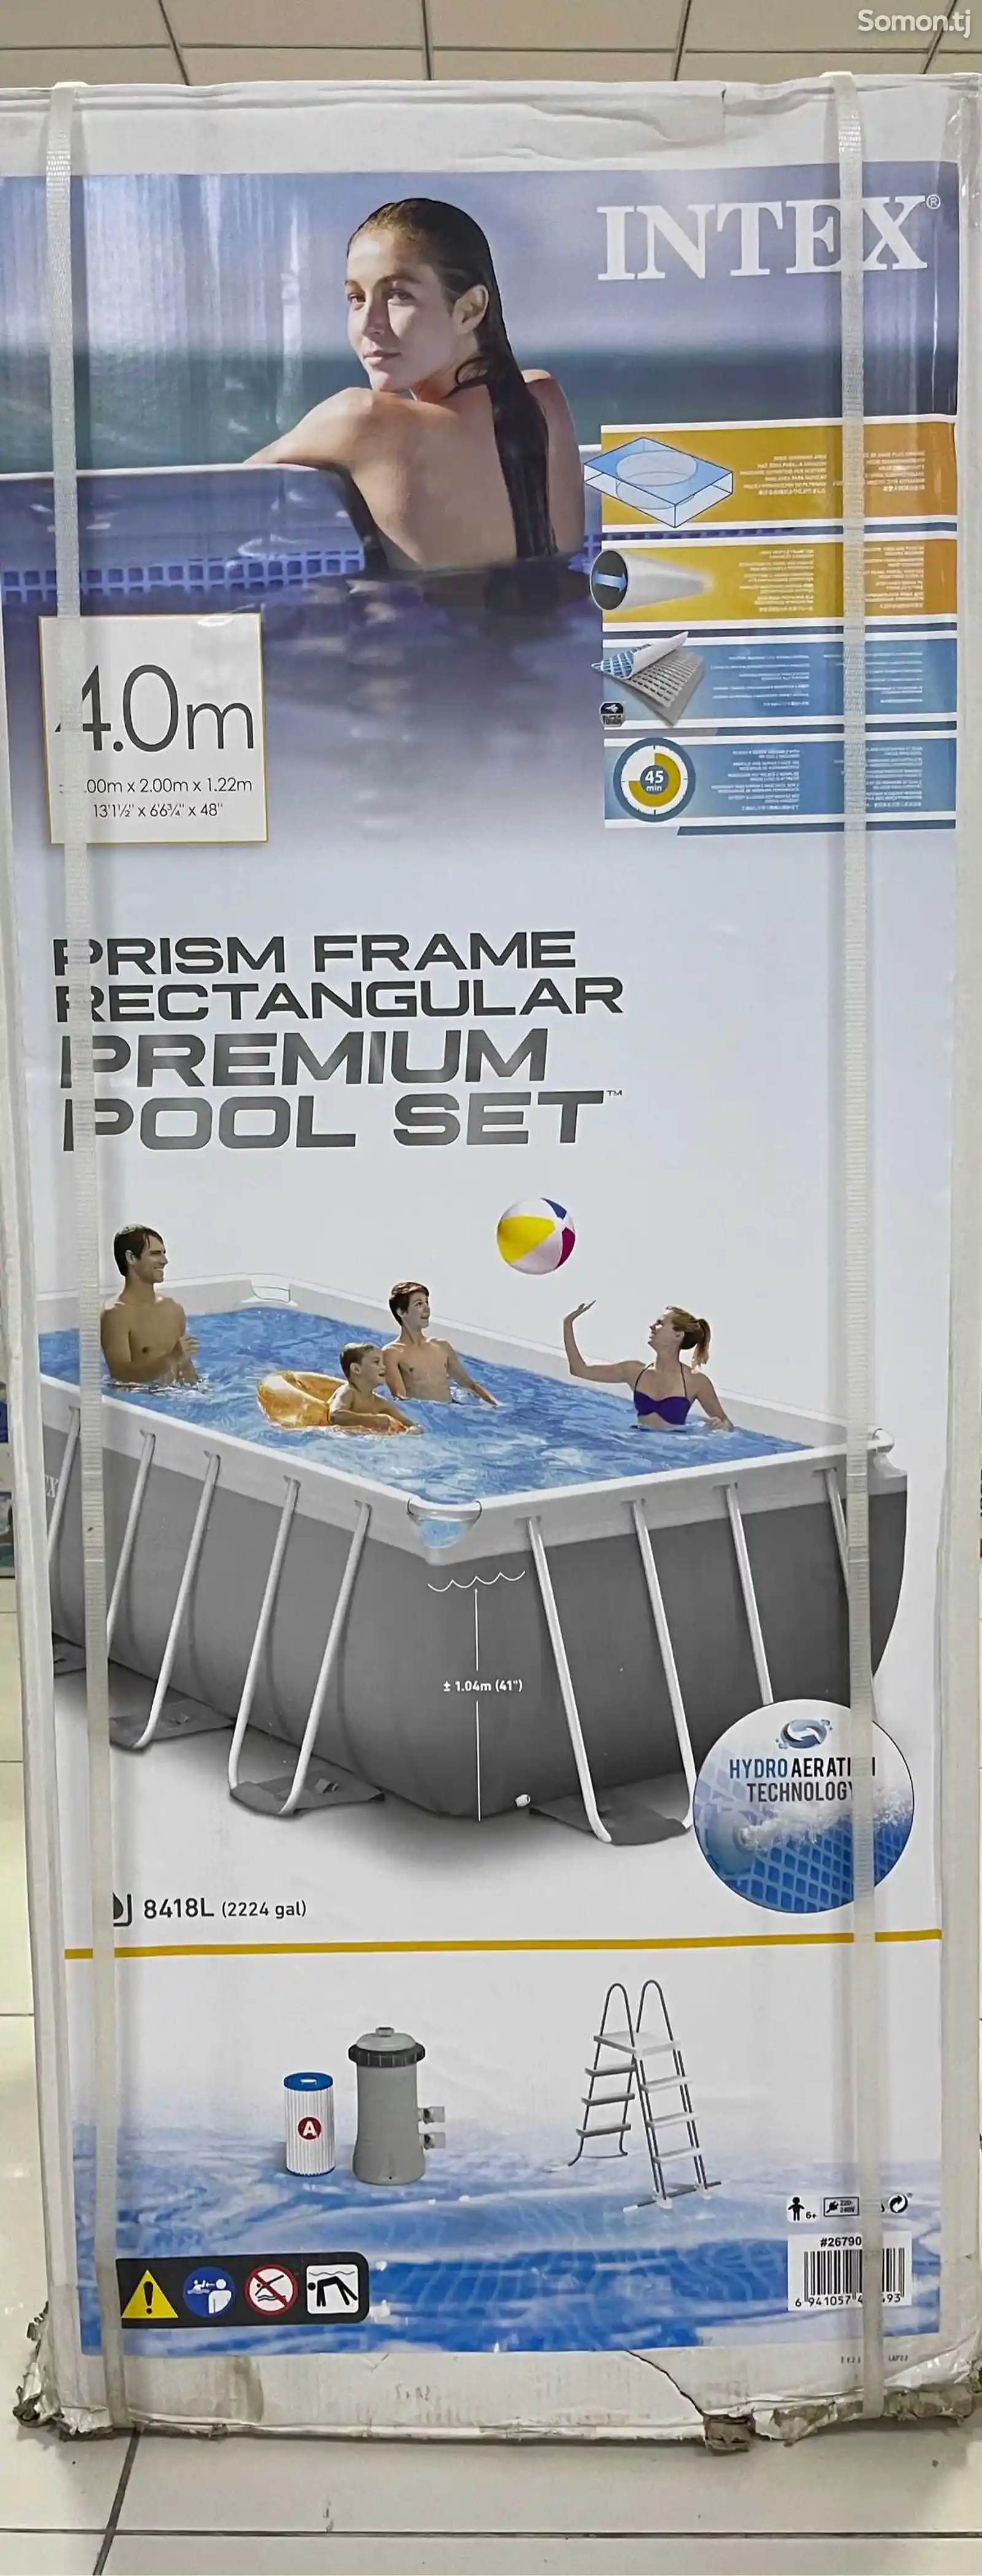 Каркасный бассейн Intex premium pool set-1